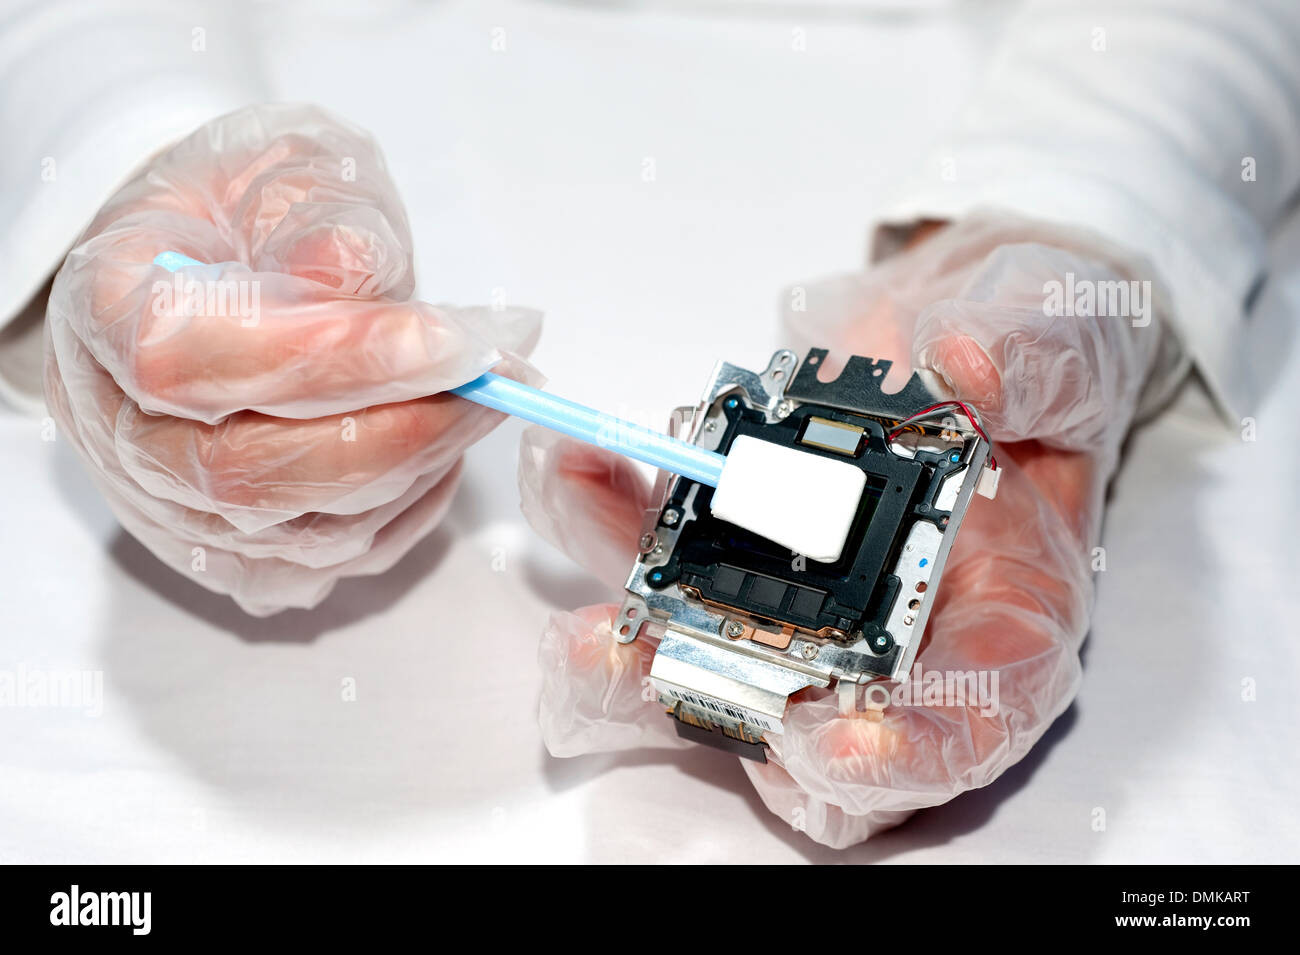 Digital-Kamera CMOS-Sensor Chip DSLR Reinigung Staub vollständig Modell veröffentlicht Stockfoto